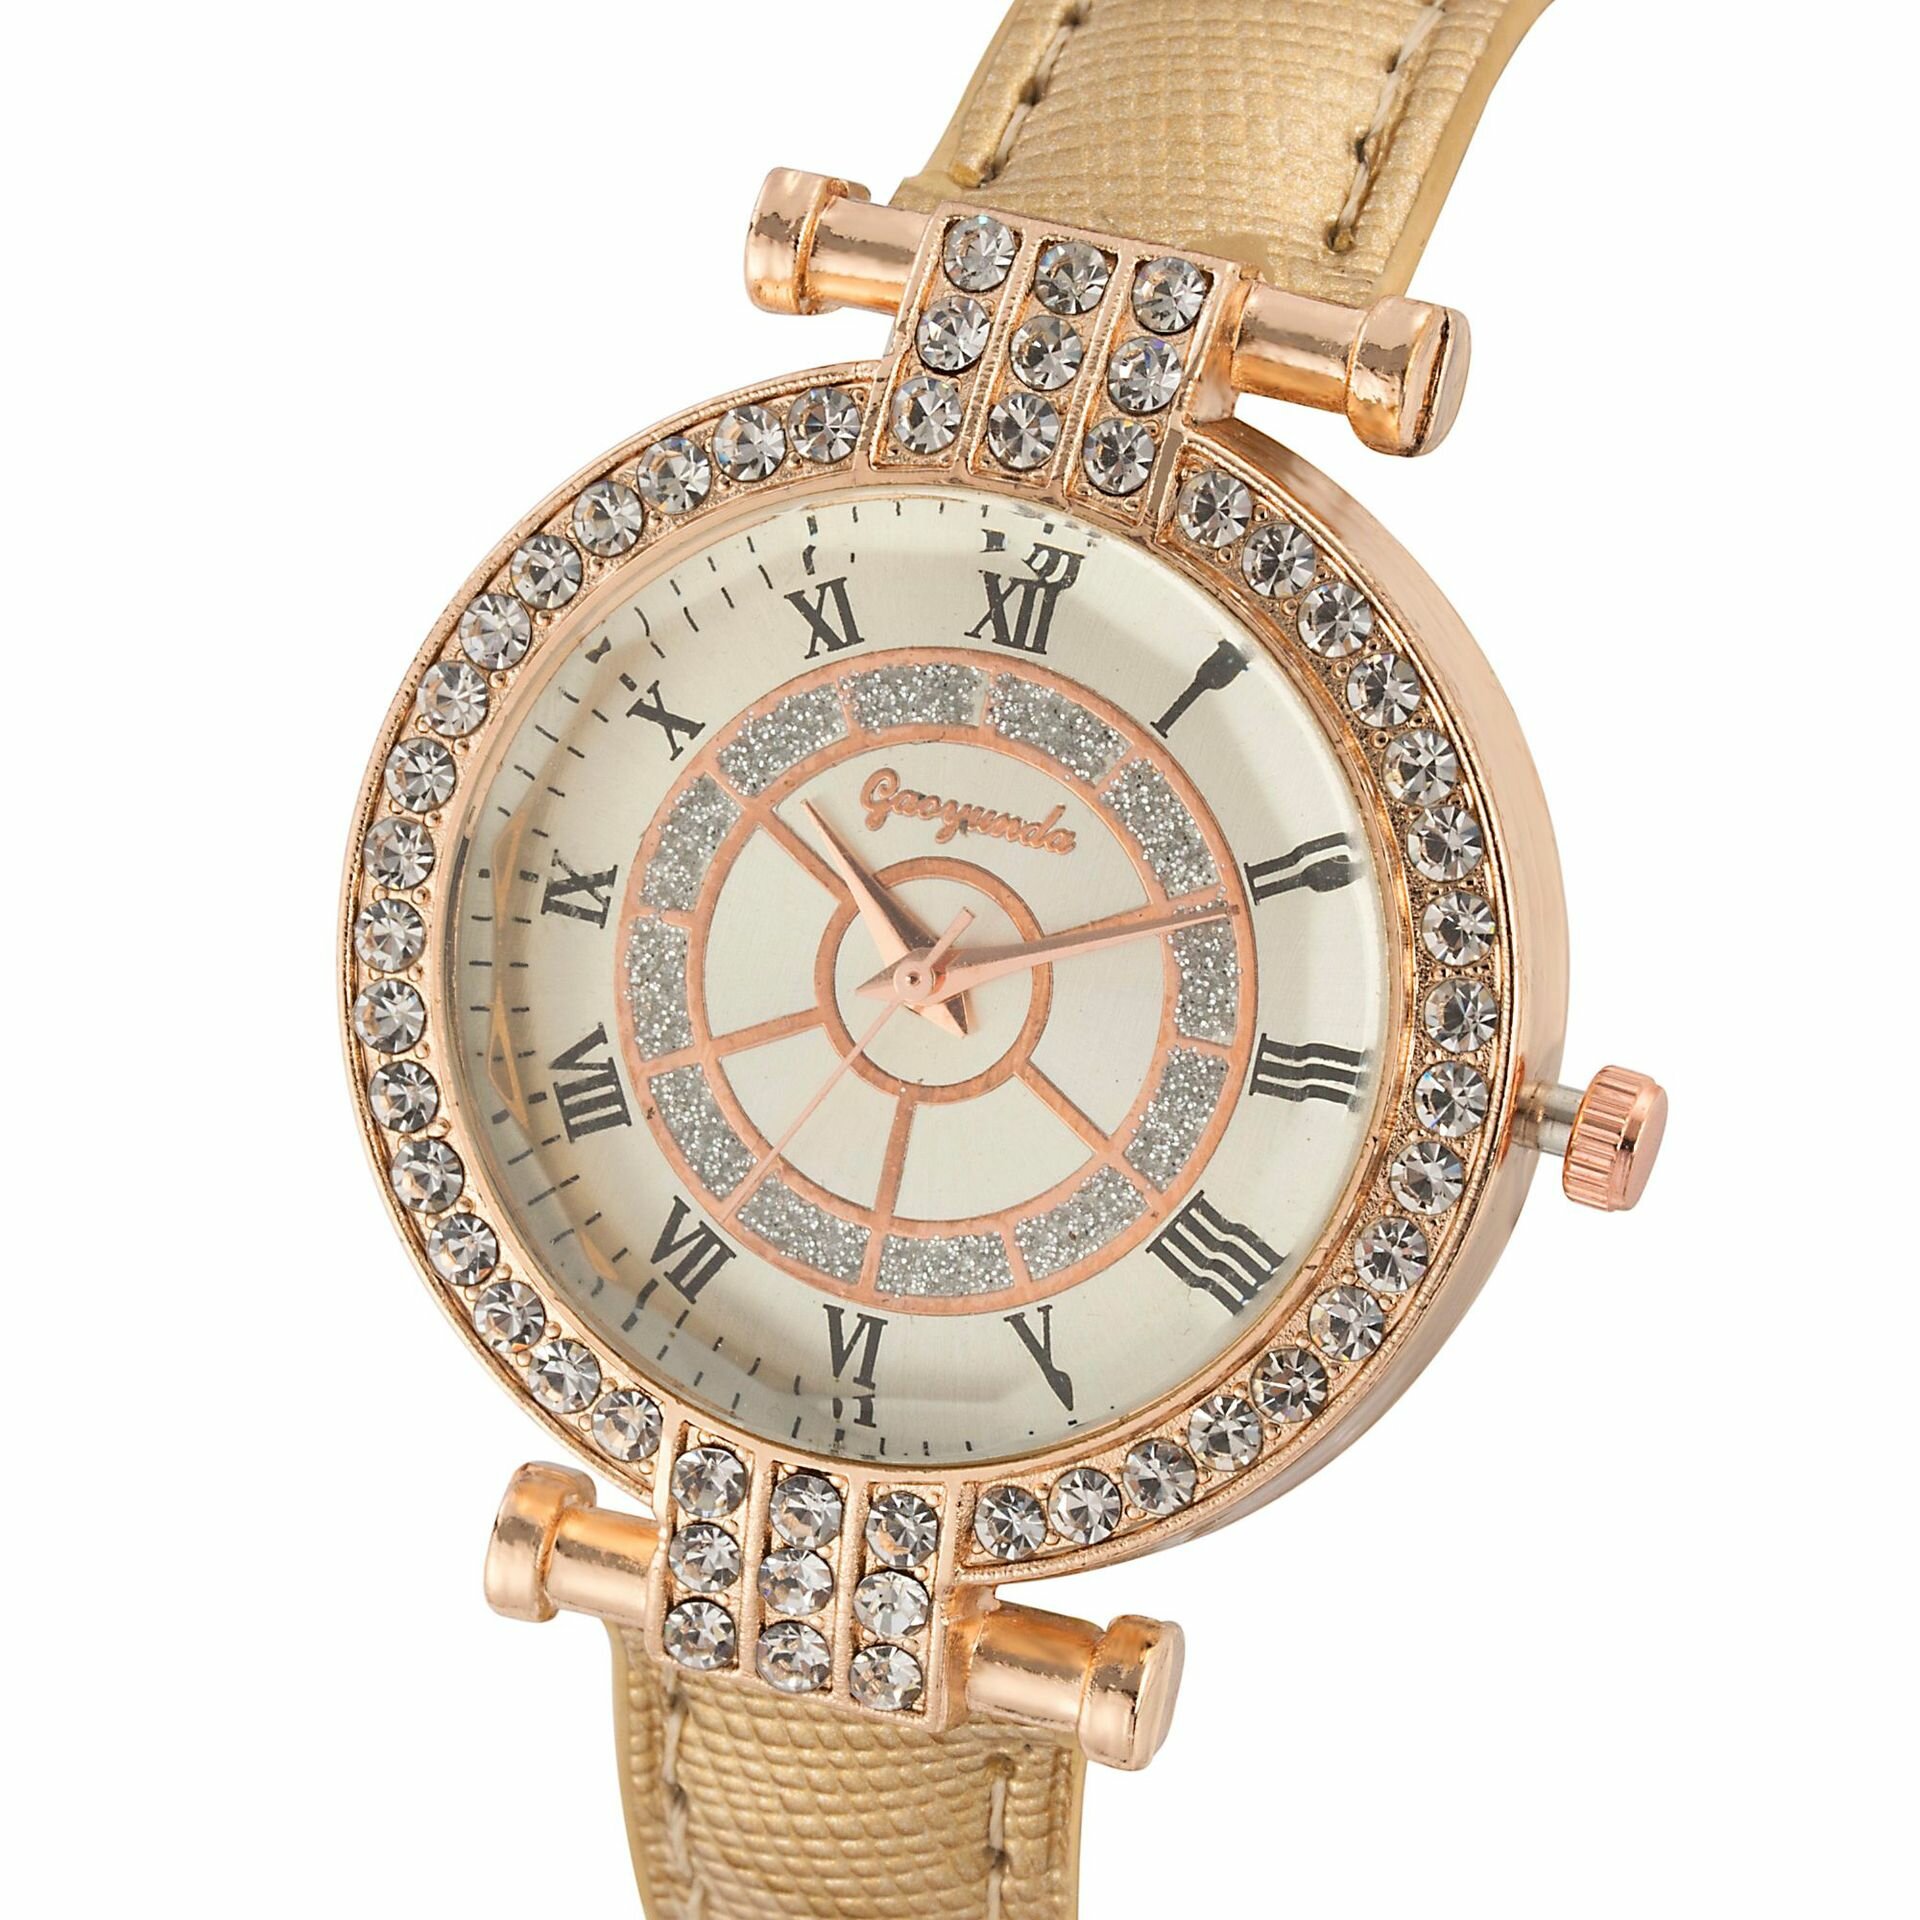 Deffrun Leather Band Women Wrist Watch Casual Style Crystal Quartz Watch